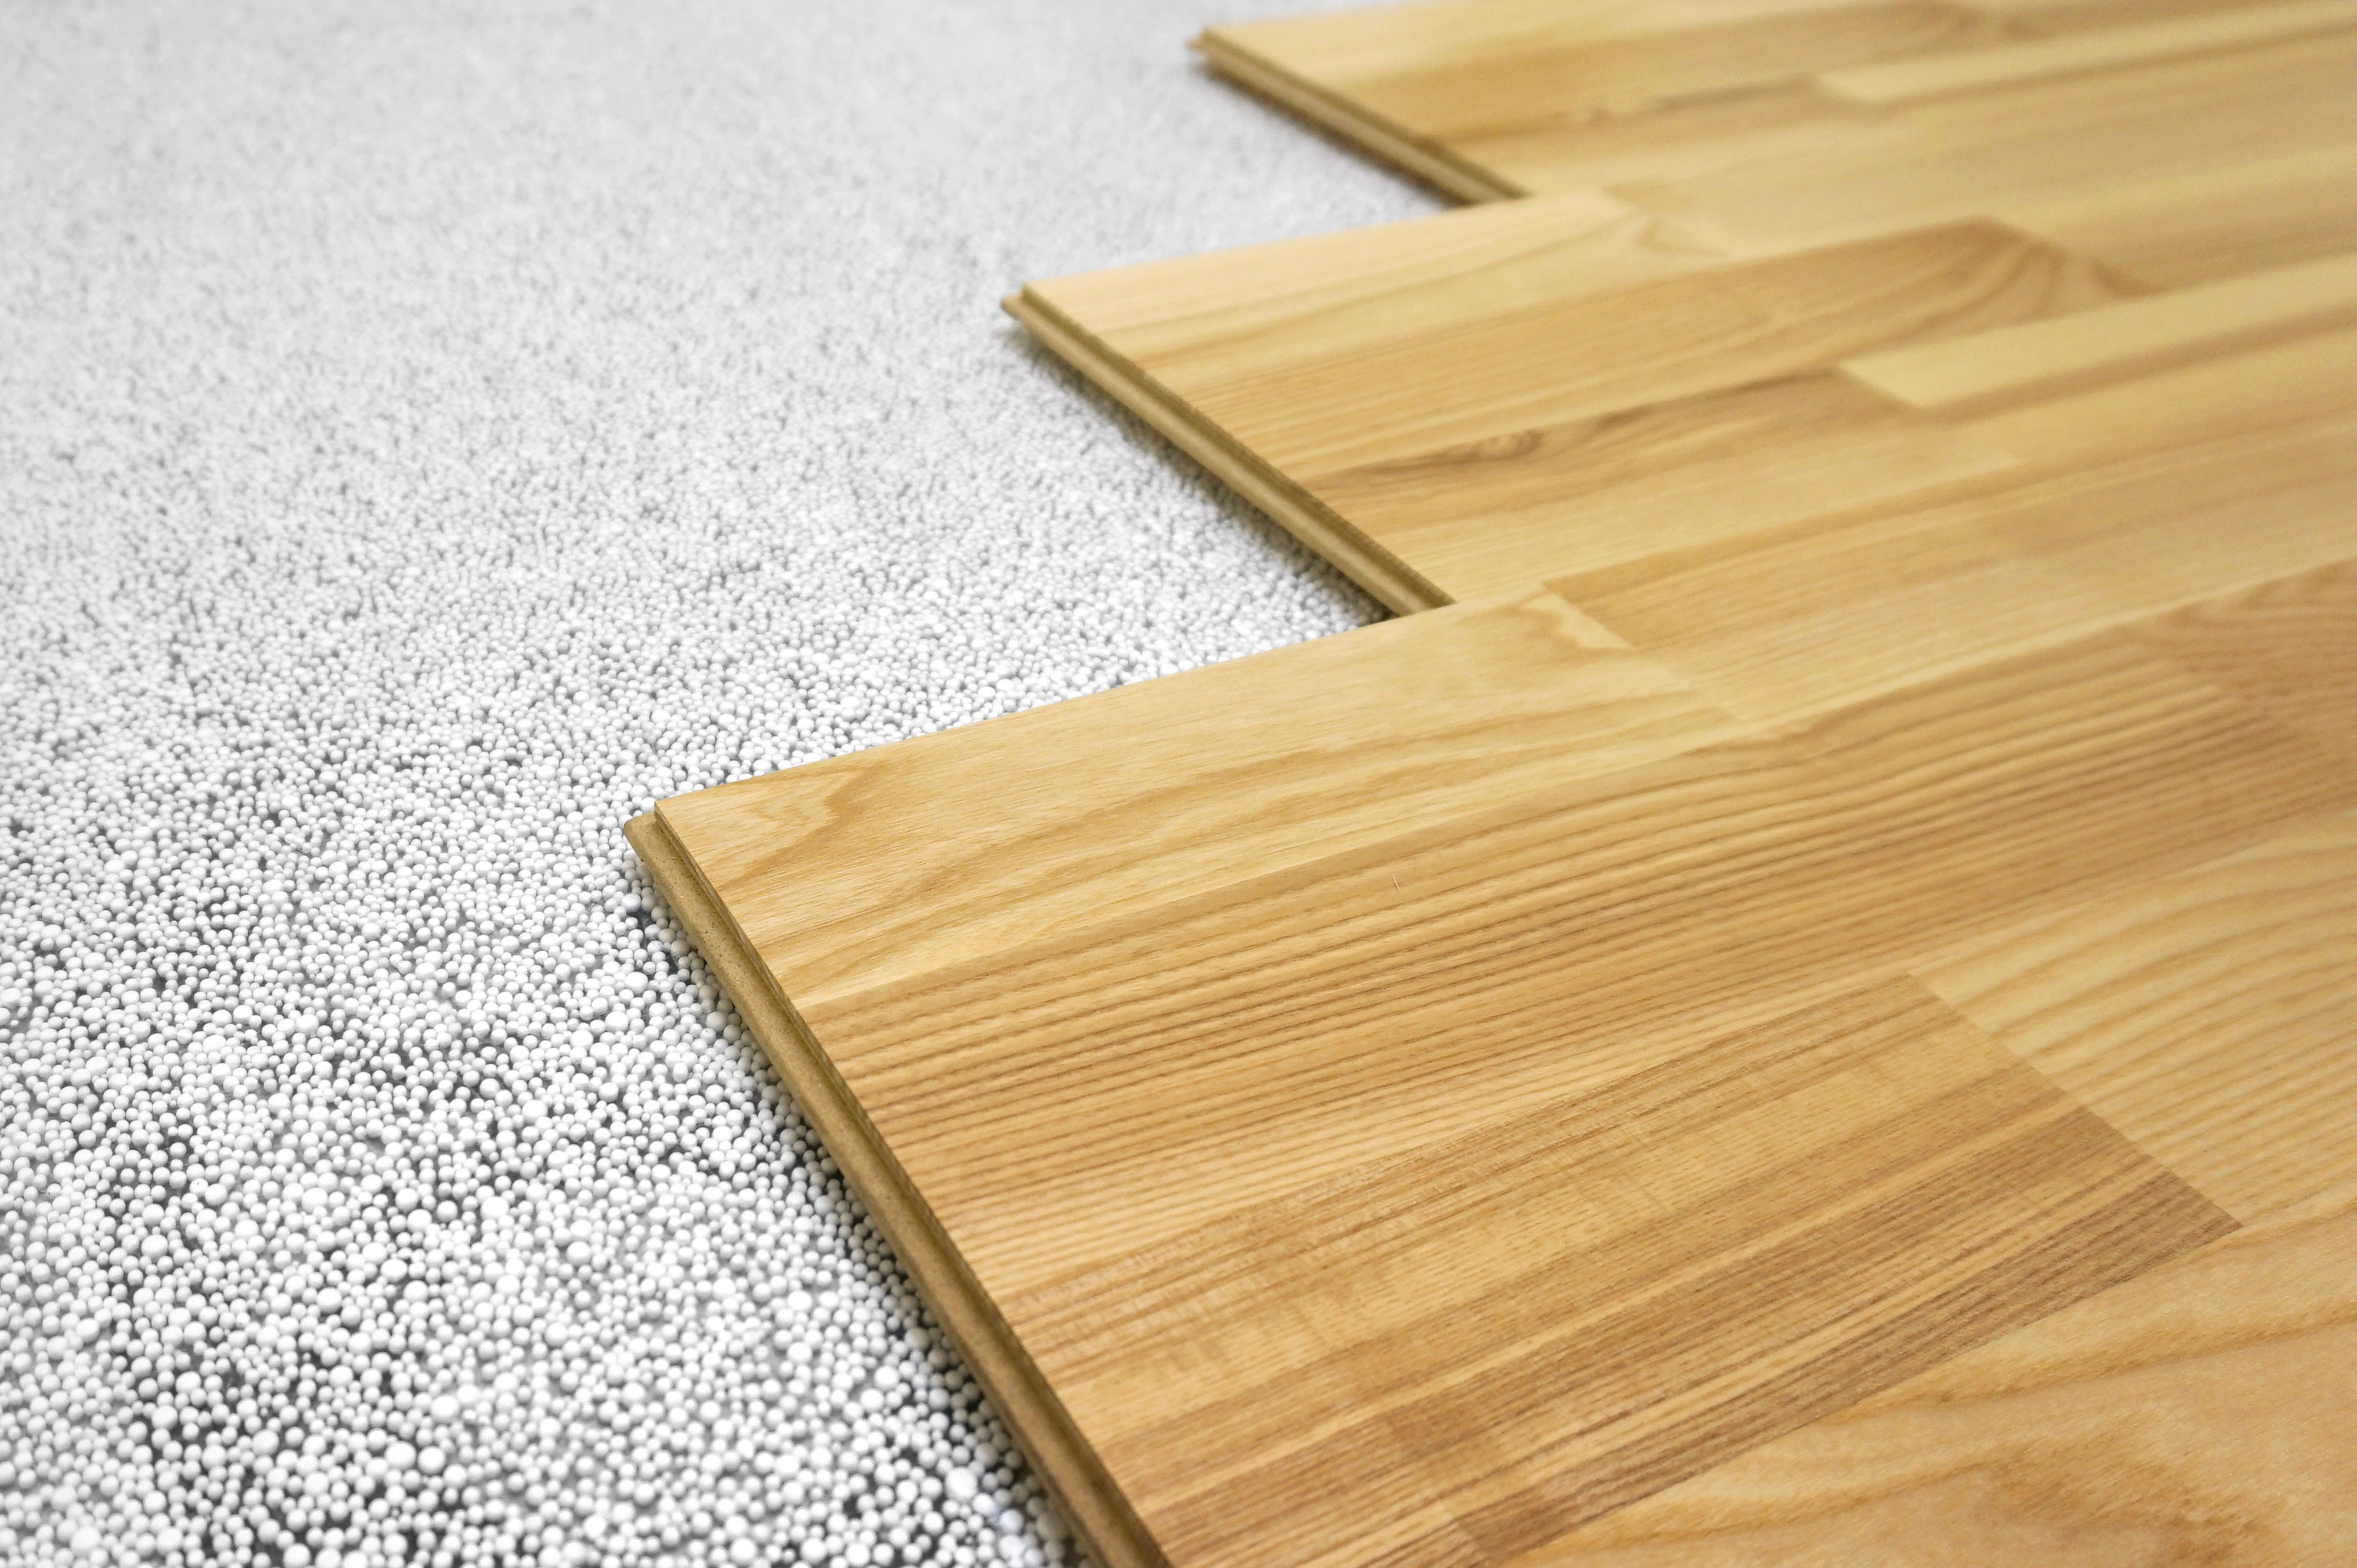 12 attractive How to Install Hardwood Floors Next to Carpet 2024 free download how to install hardwood floors next to carpet of what does it cost to install laminate flooring angies list regarding wood lam